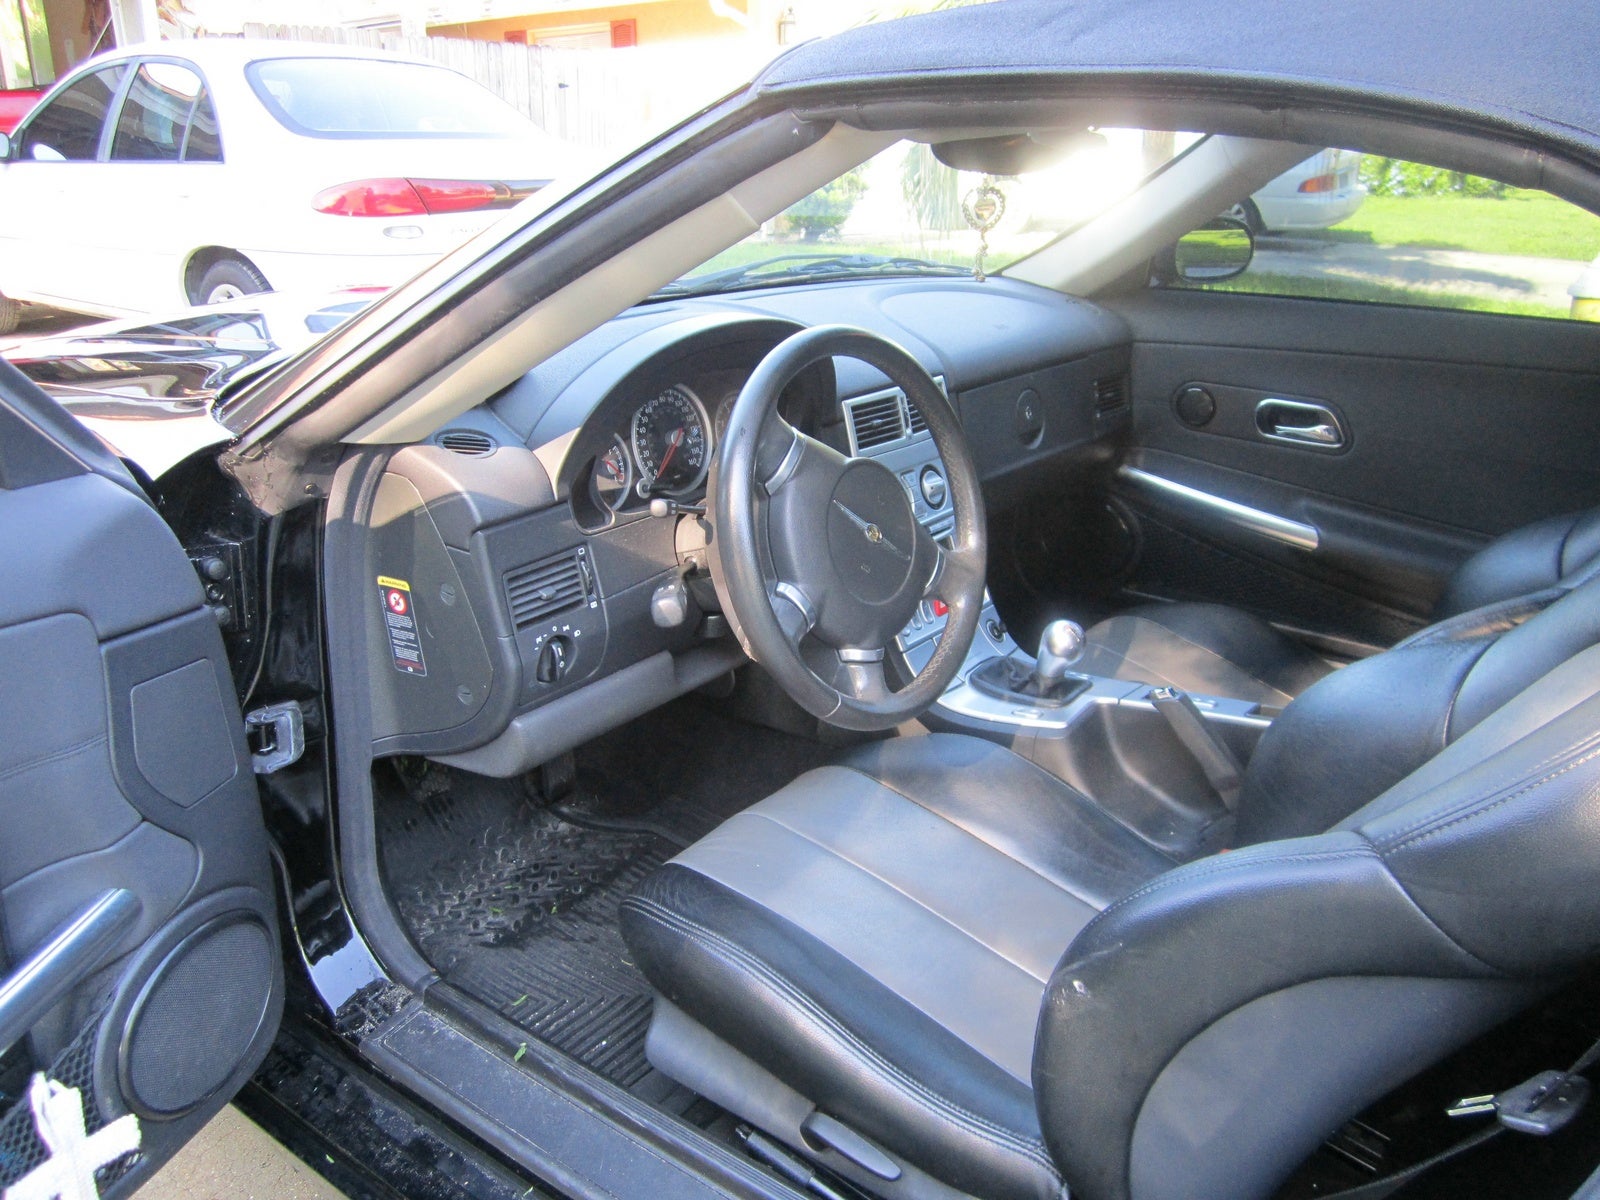 Chrysler crossfire interior #2